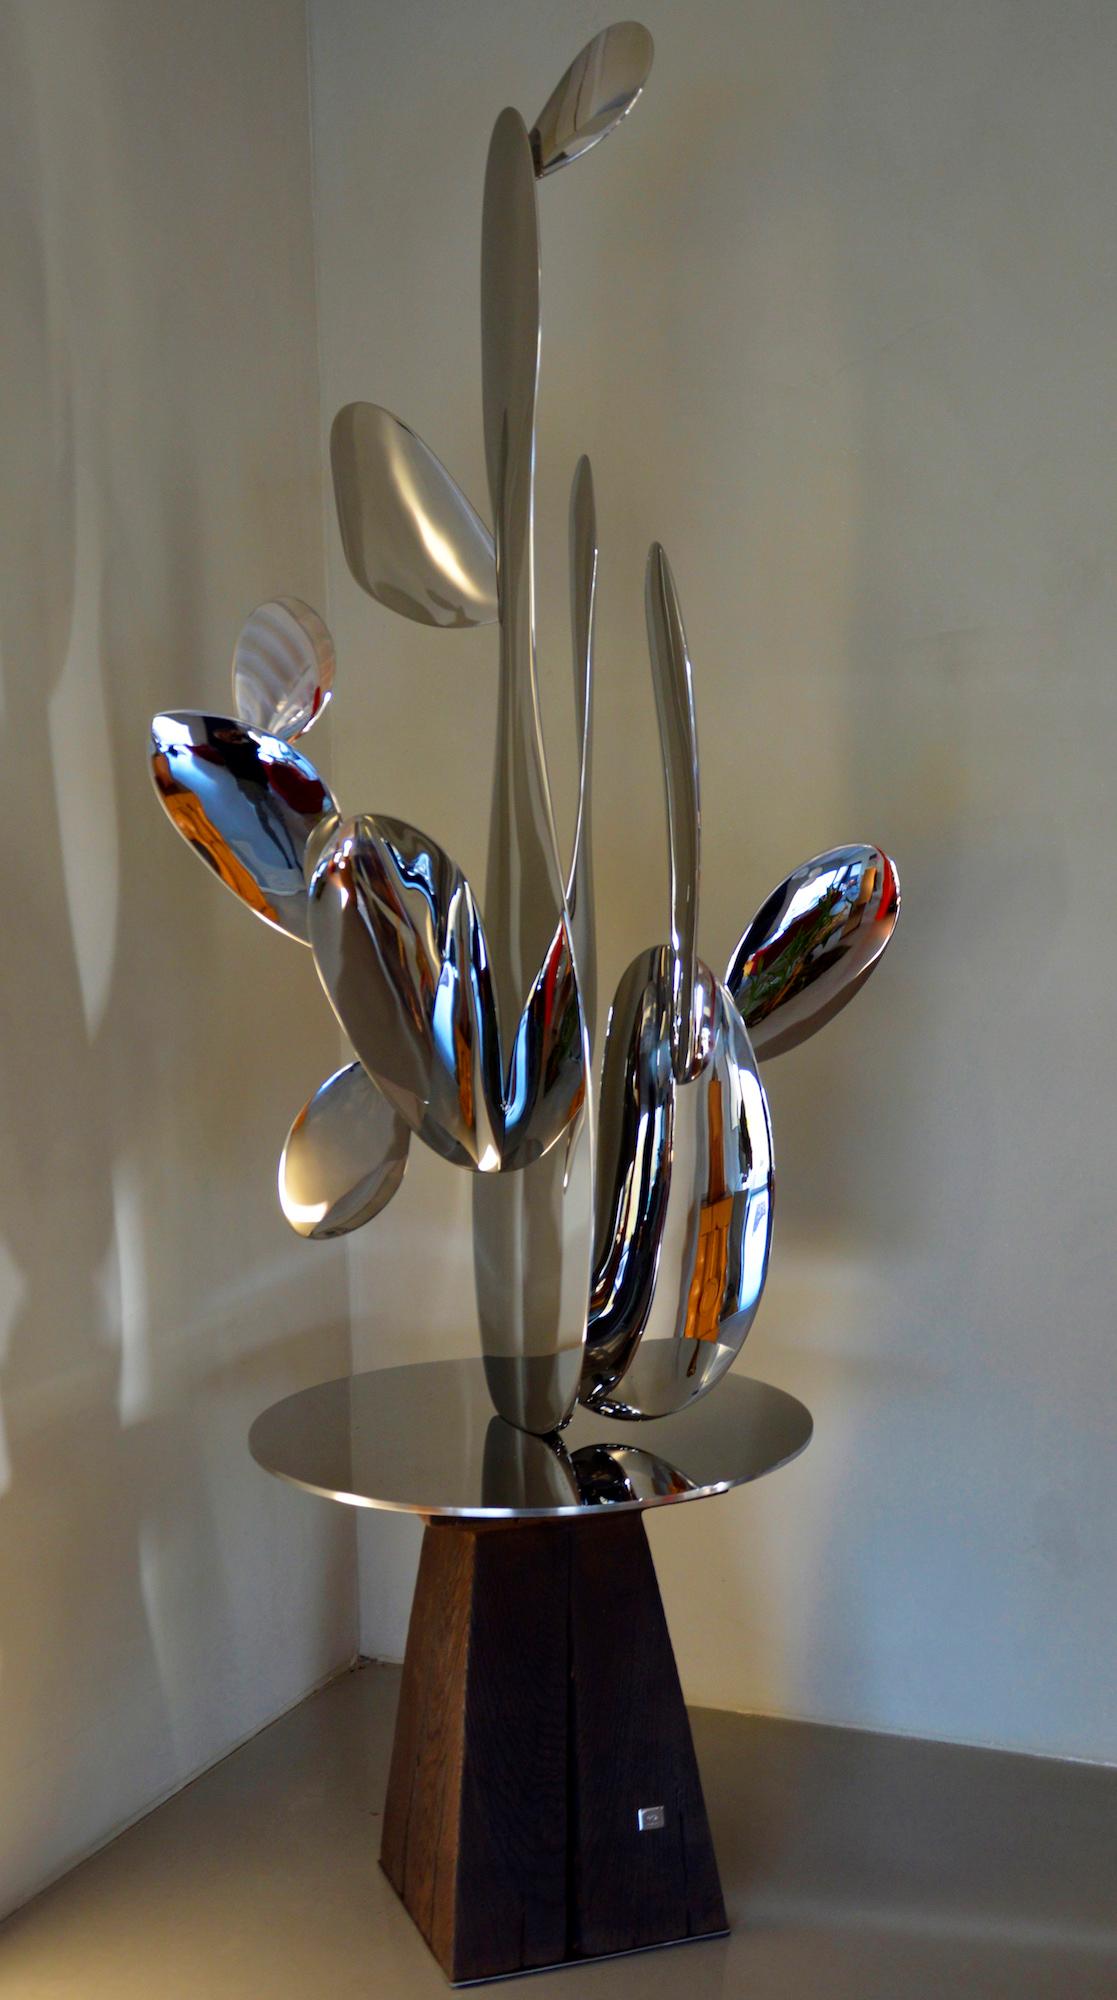 Kaktus by Franck K - Stainless steel sculpture, reflections, light, vision For Sale 2